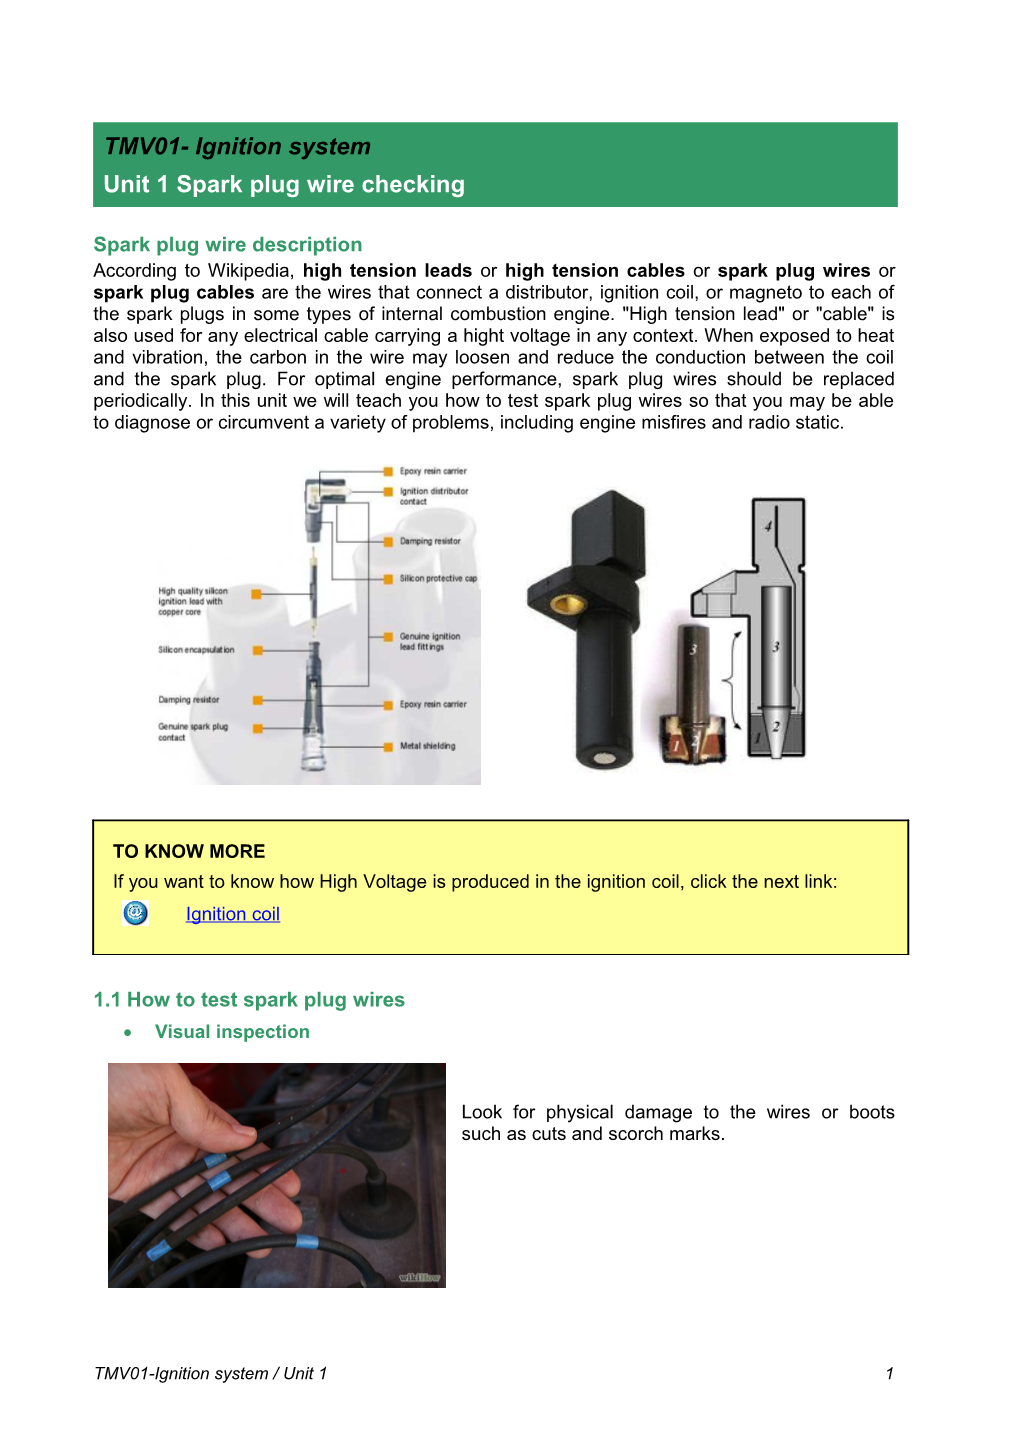 Spark Plug Wire Description